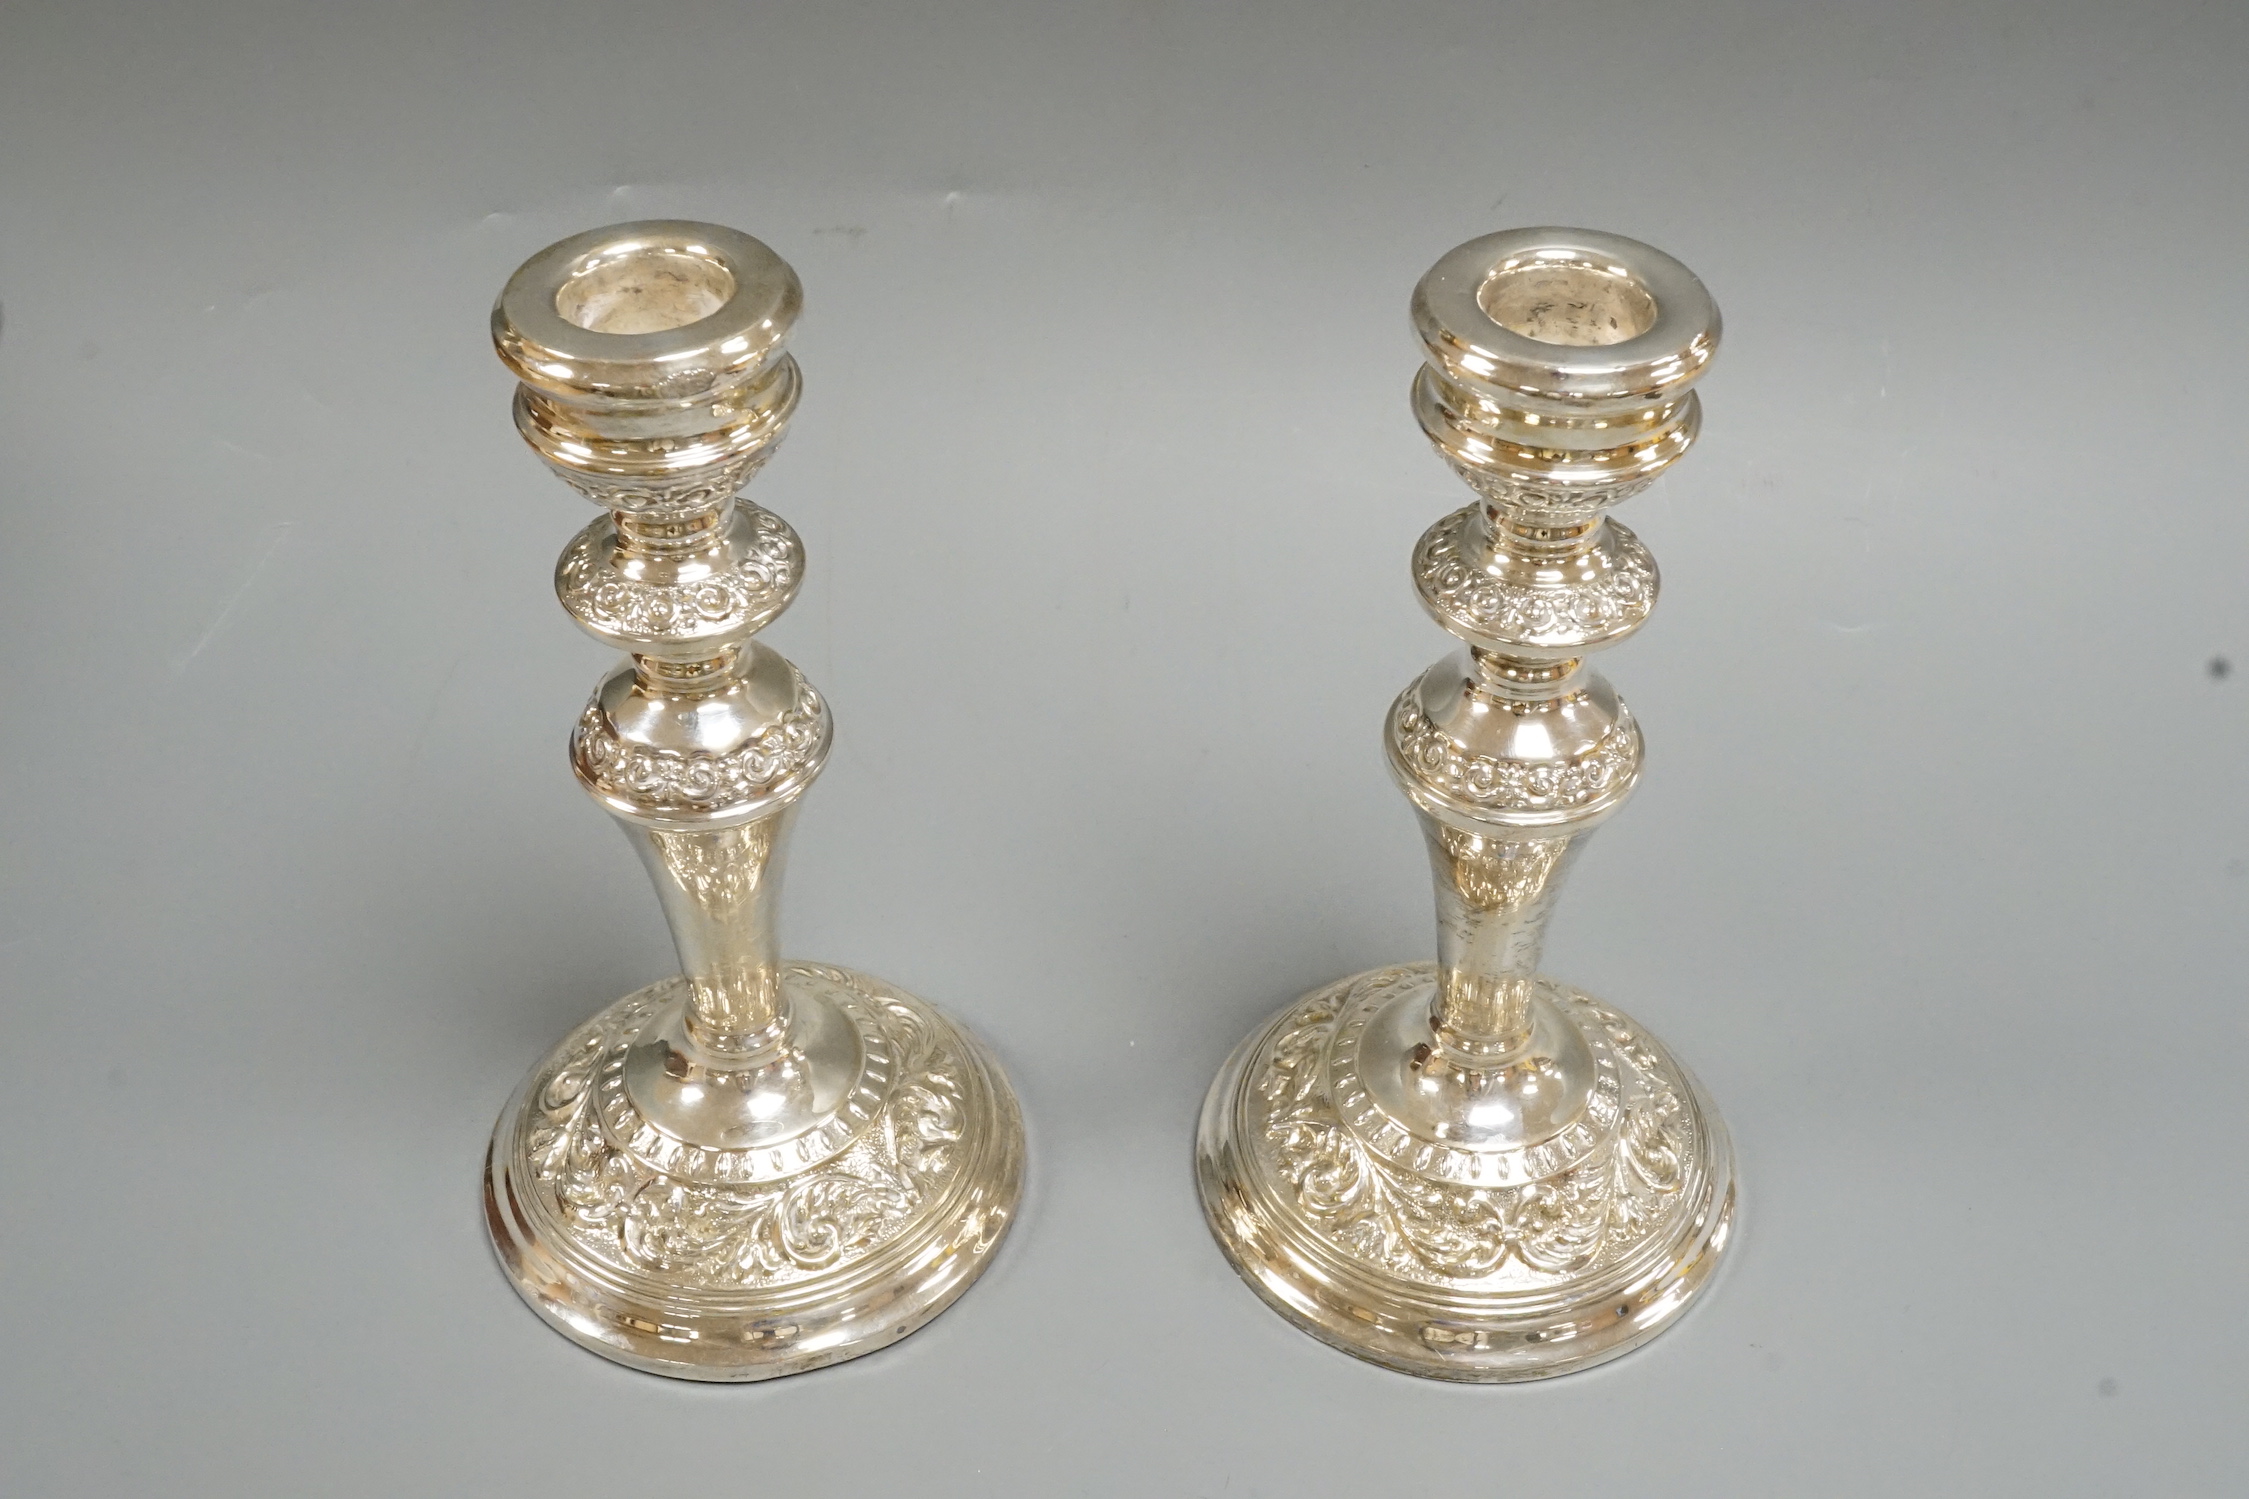 A pair of Elizabeth II silver mounted candlesticks, W.I. Broadway & Co, Birmingham, 1965/66, height 18.9cm.